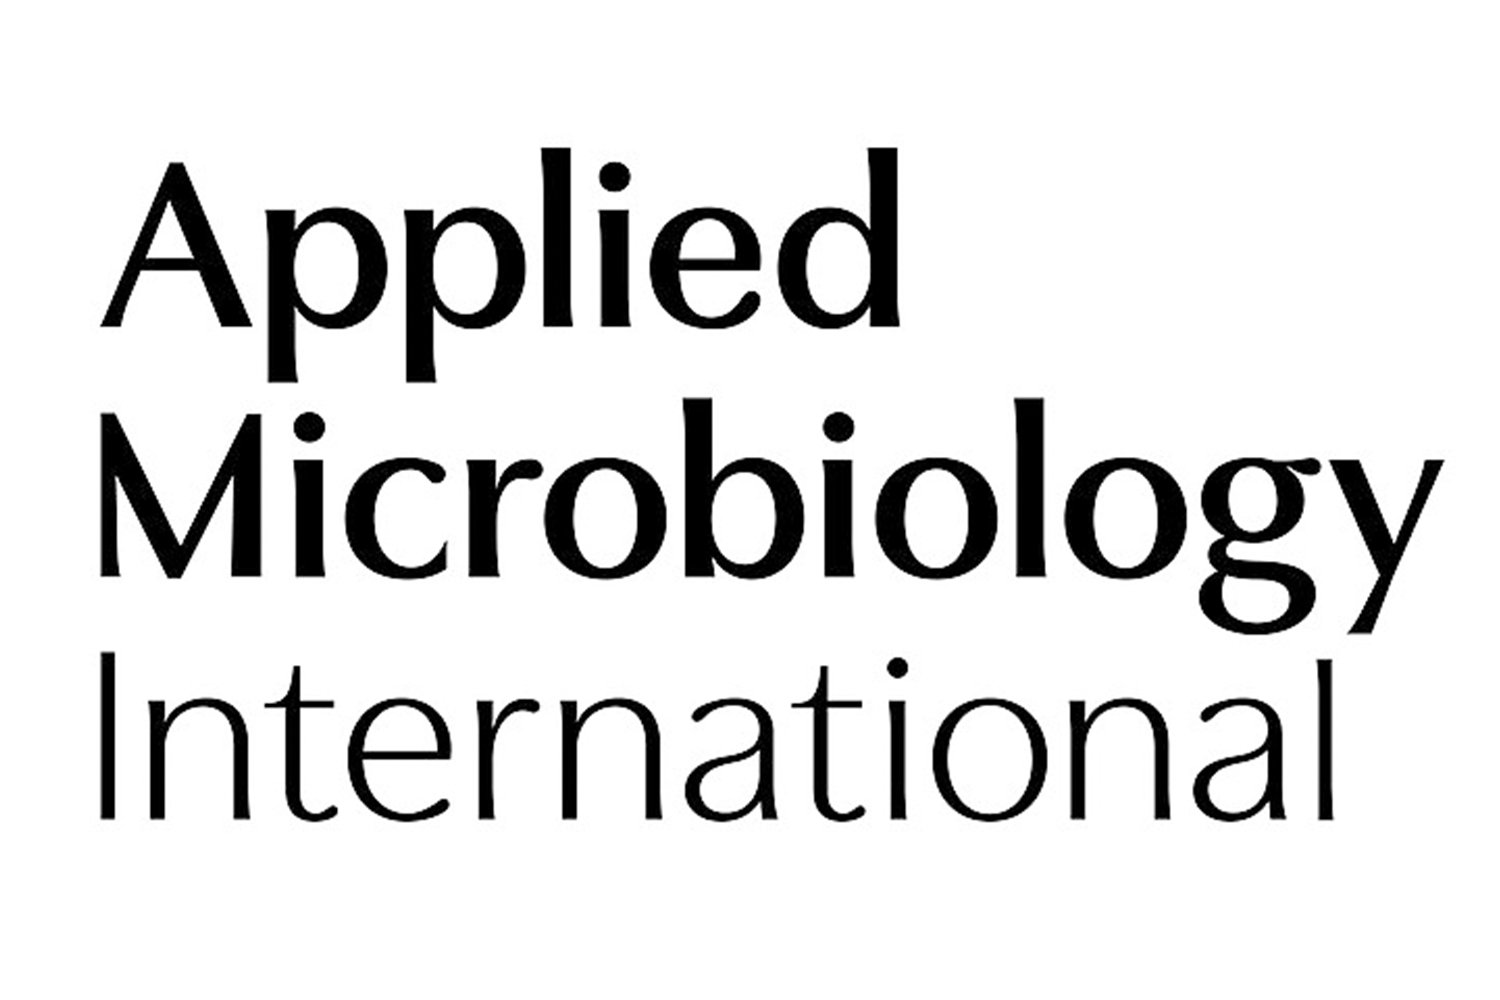 Dr Miguel Toribio-Mateas Applied Microbiology International Member copy.jpg (Copy) (Copy) (Copy) (Copy)